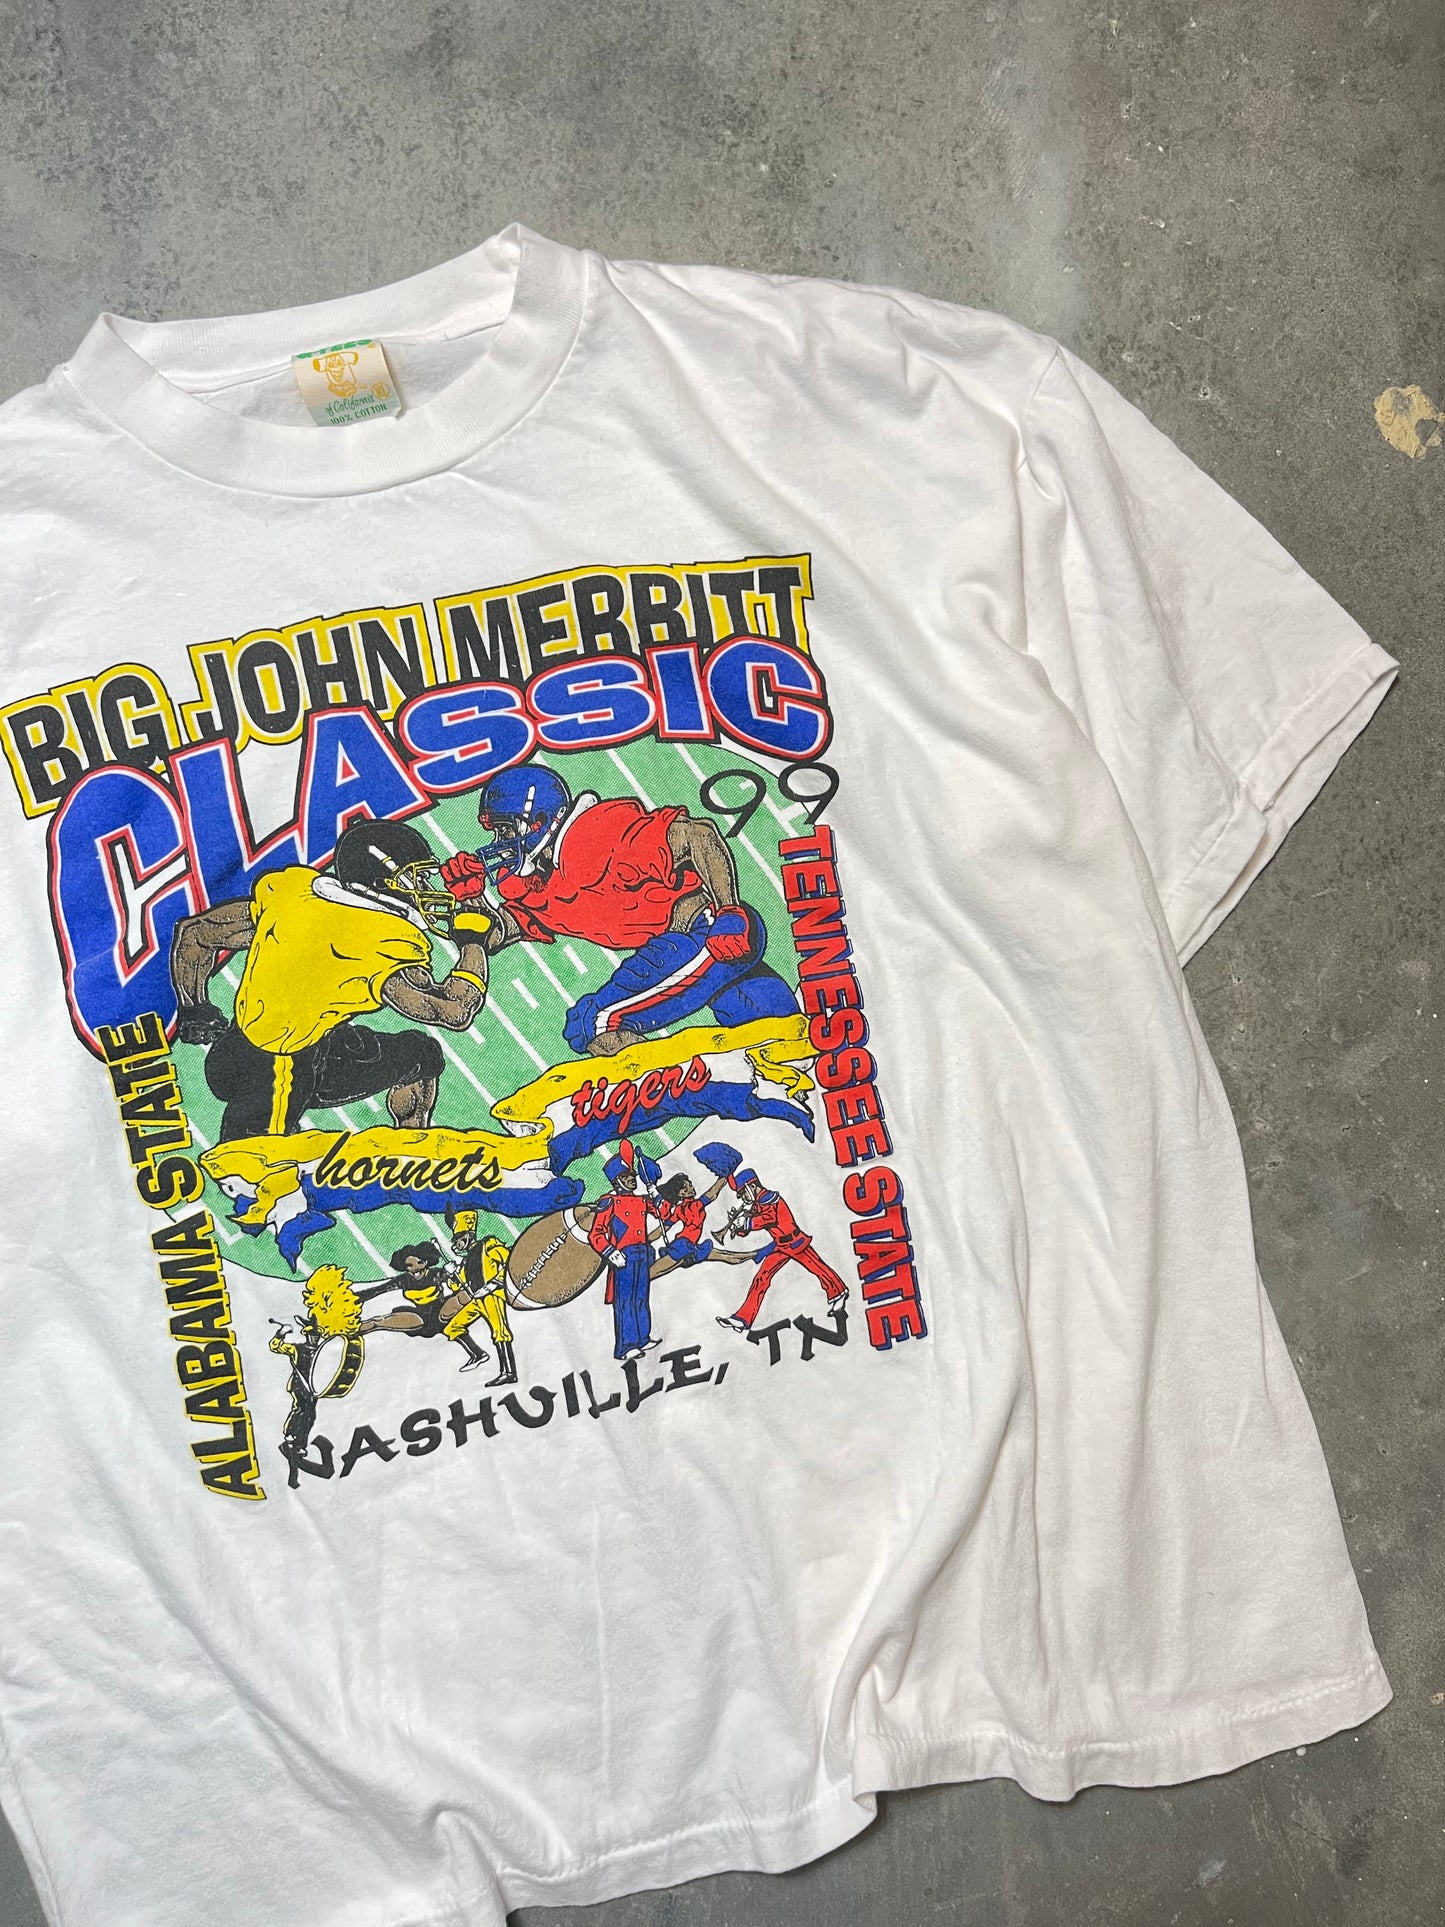 1999 Big John Merritt Classic Alabama State vs. Tennessee State Vintage HBCU Tee (XL)